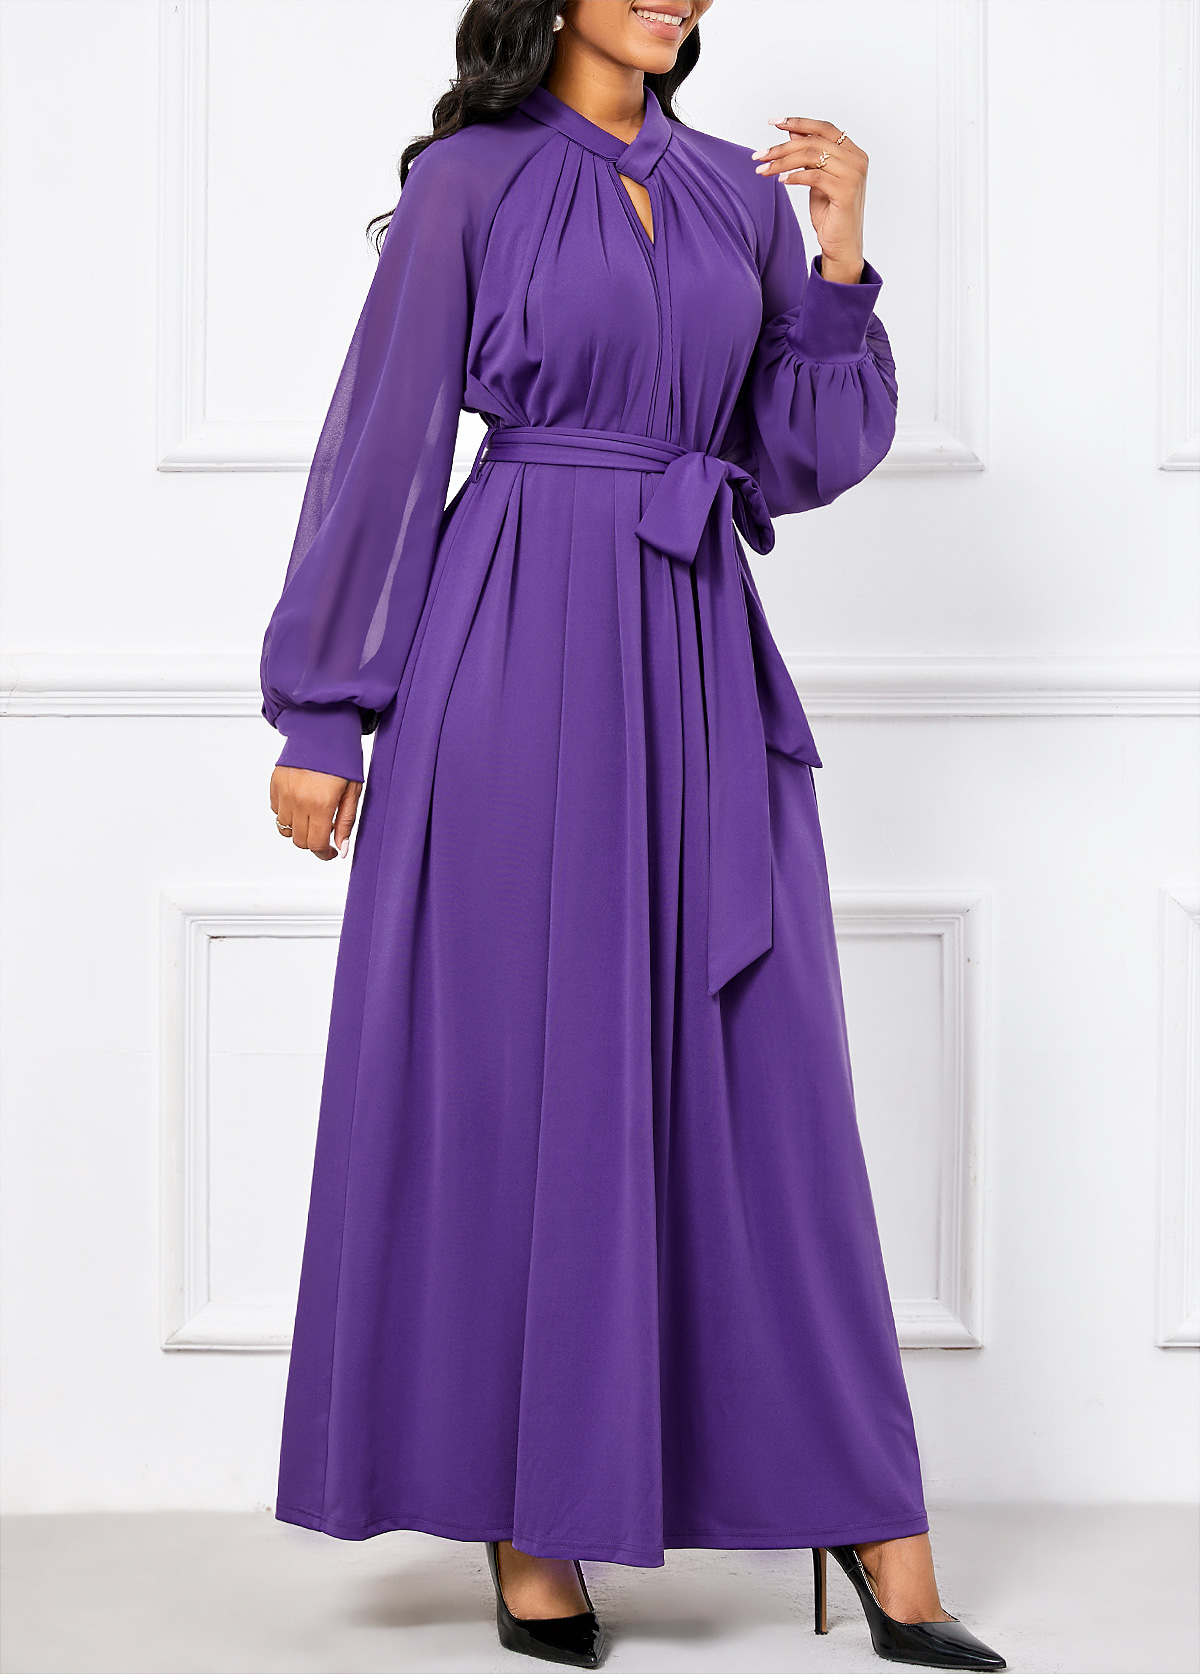 Criss Cross Belted Purple Long Sleeve Maxi Dress